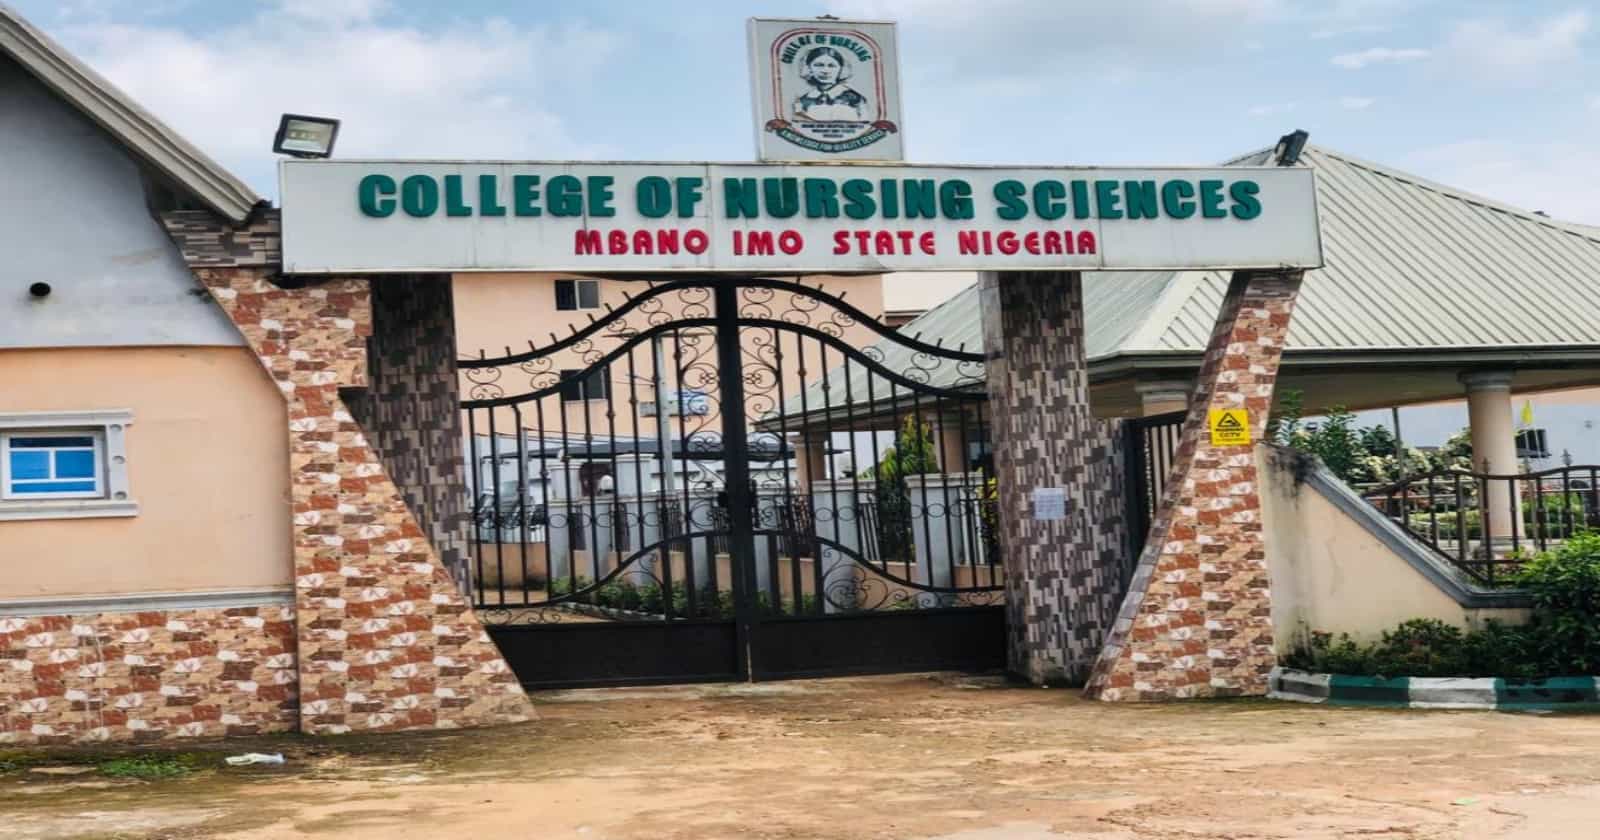 College of Nursing Sciences Mbano entrance examination